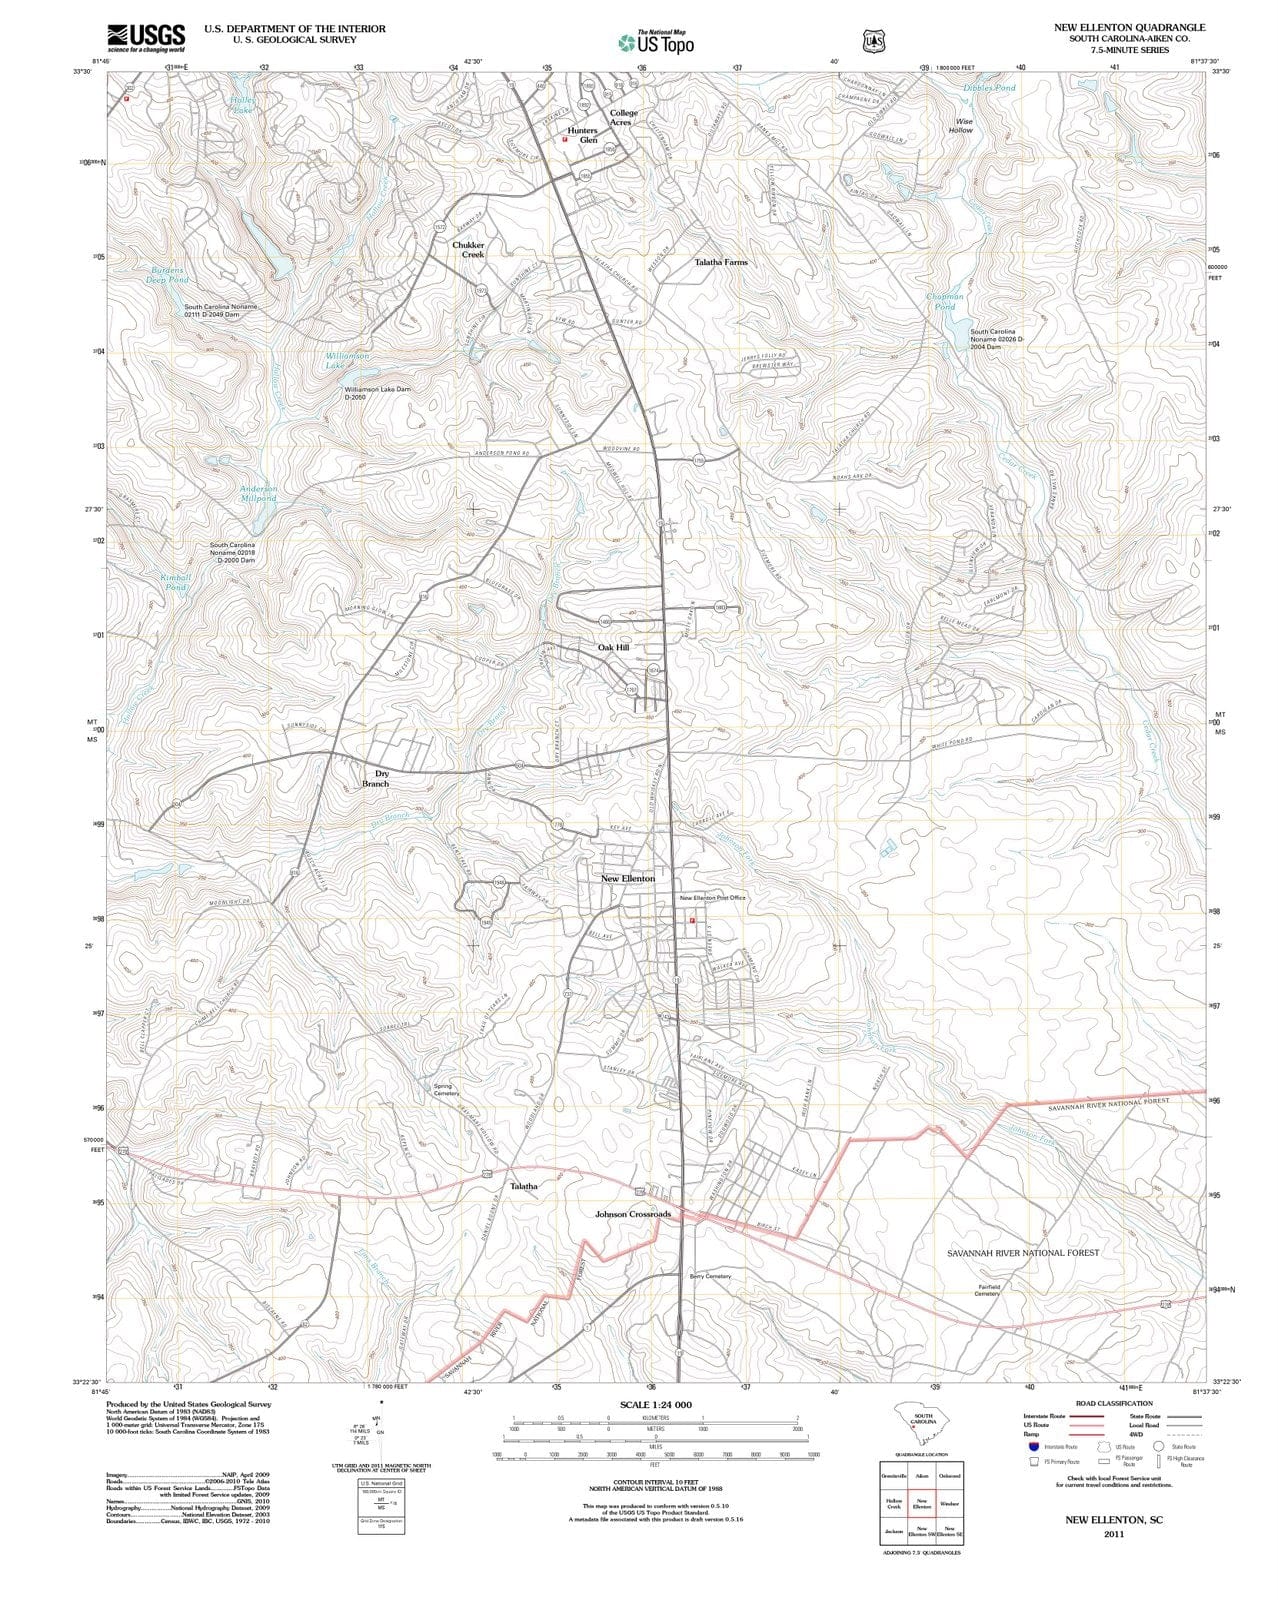 2011 New Ellenton, SC - South Carolina - USGS Topographic Map ...